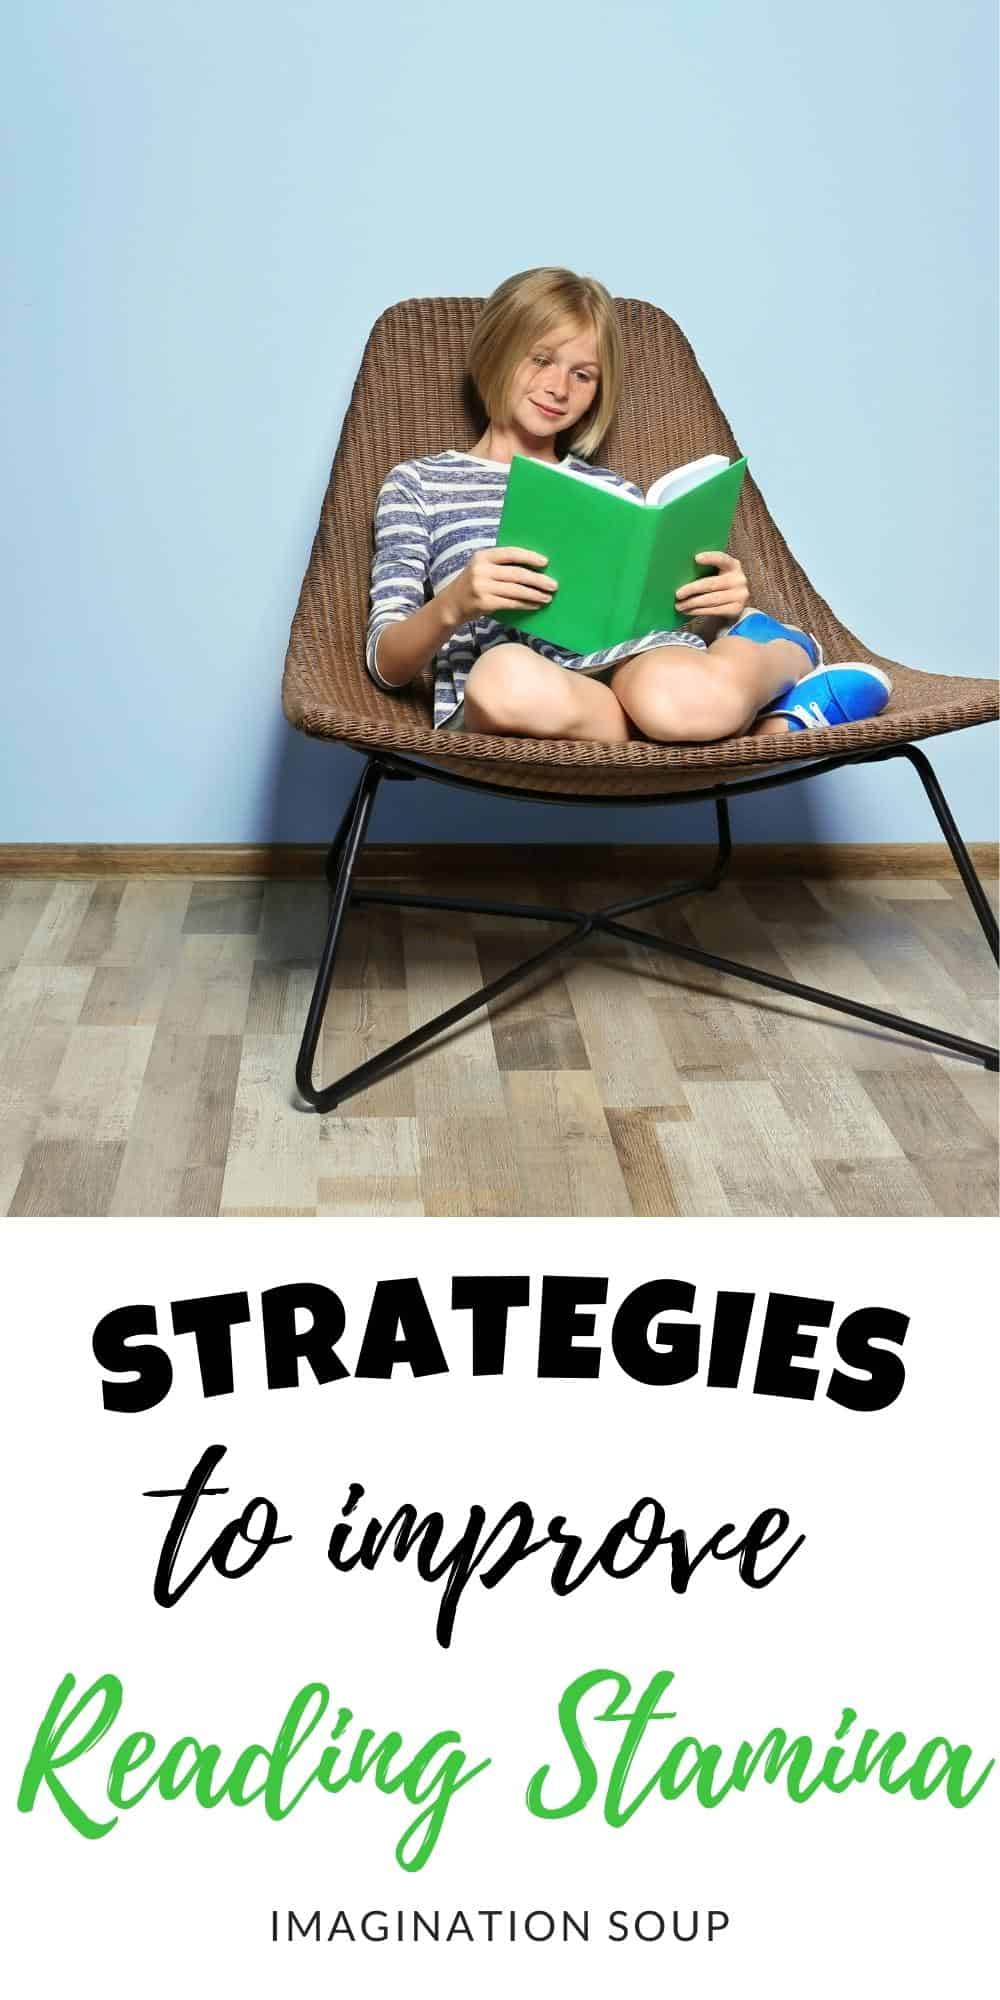 Strategies to Improve Children's Reading Stamina